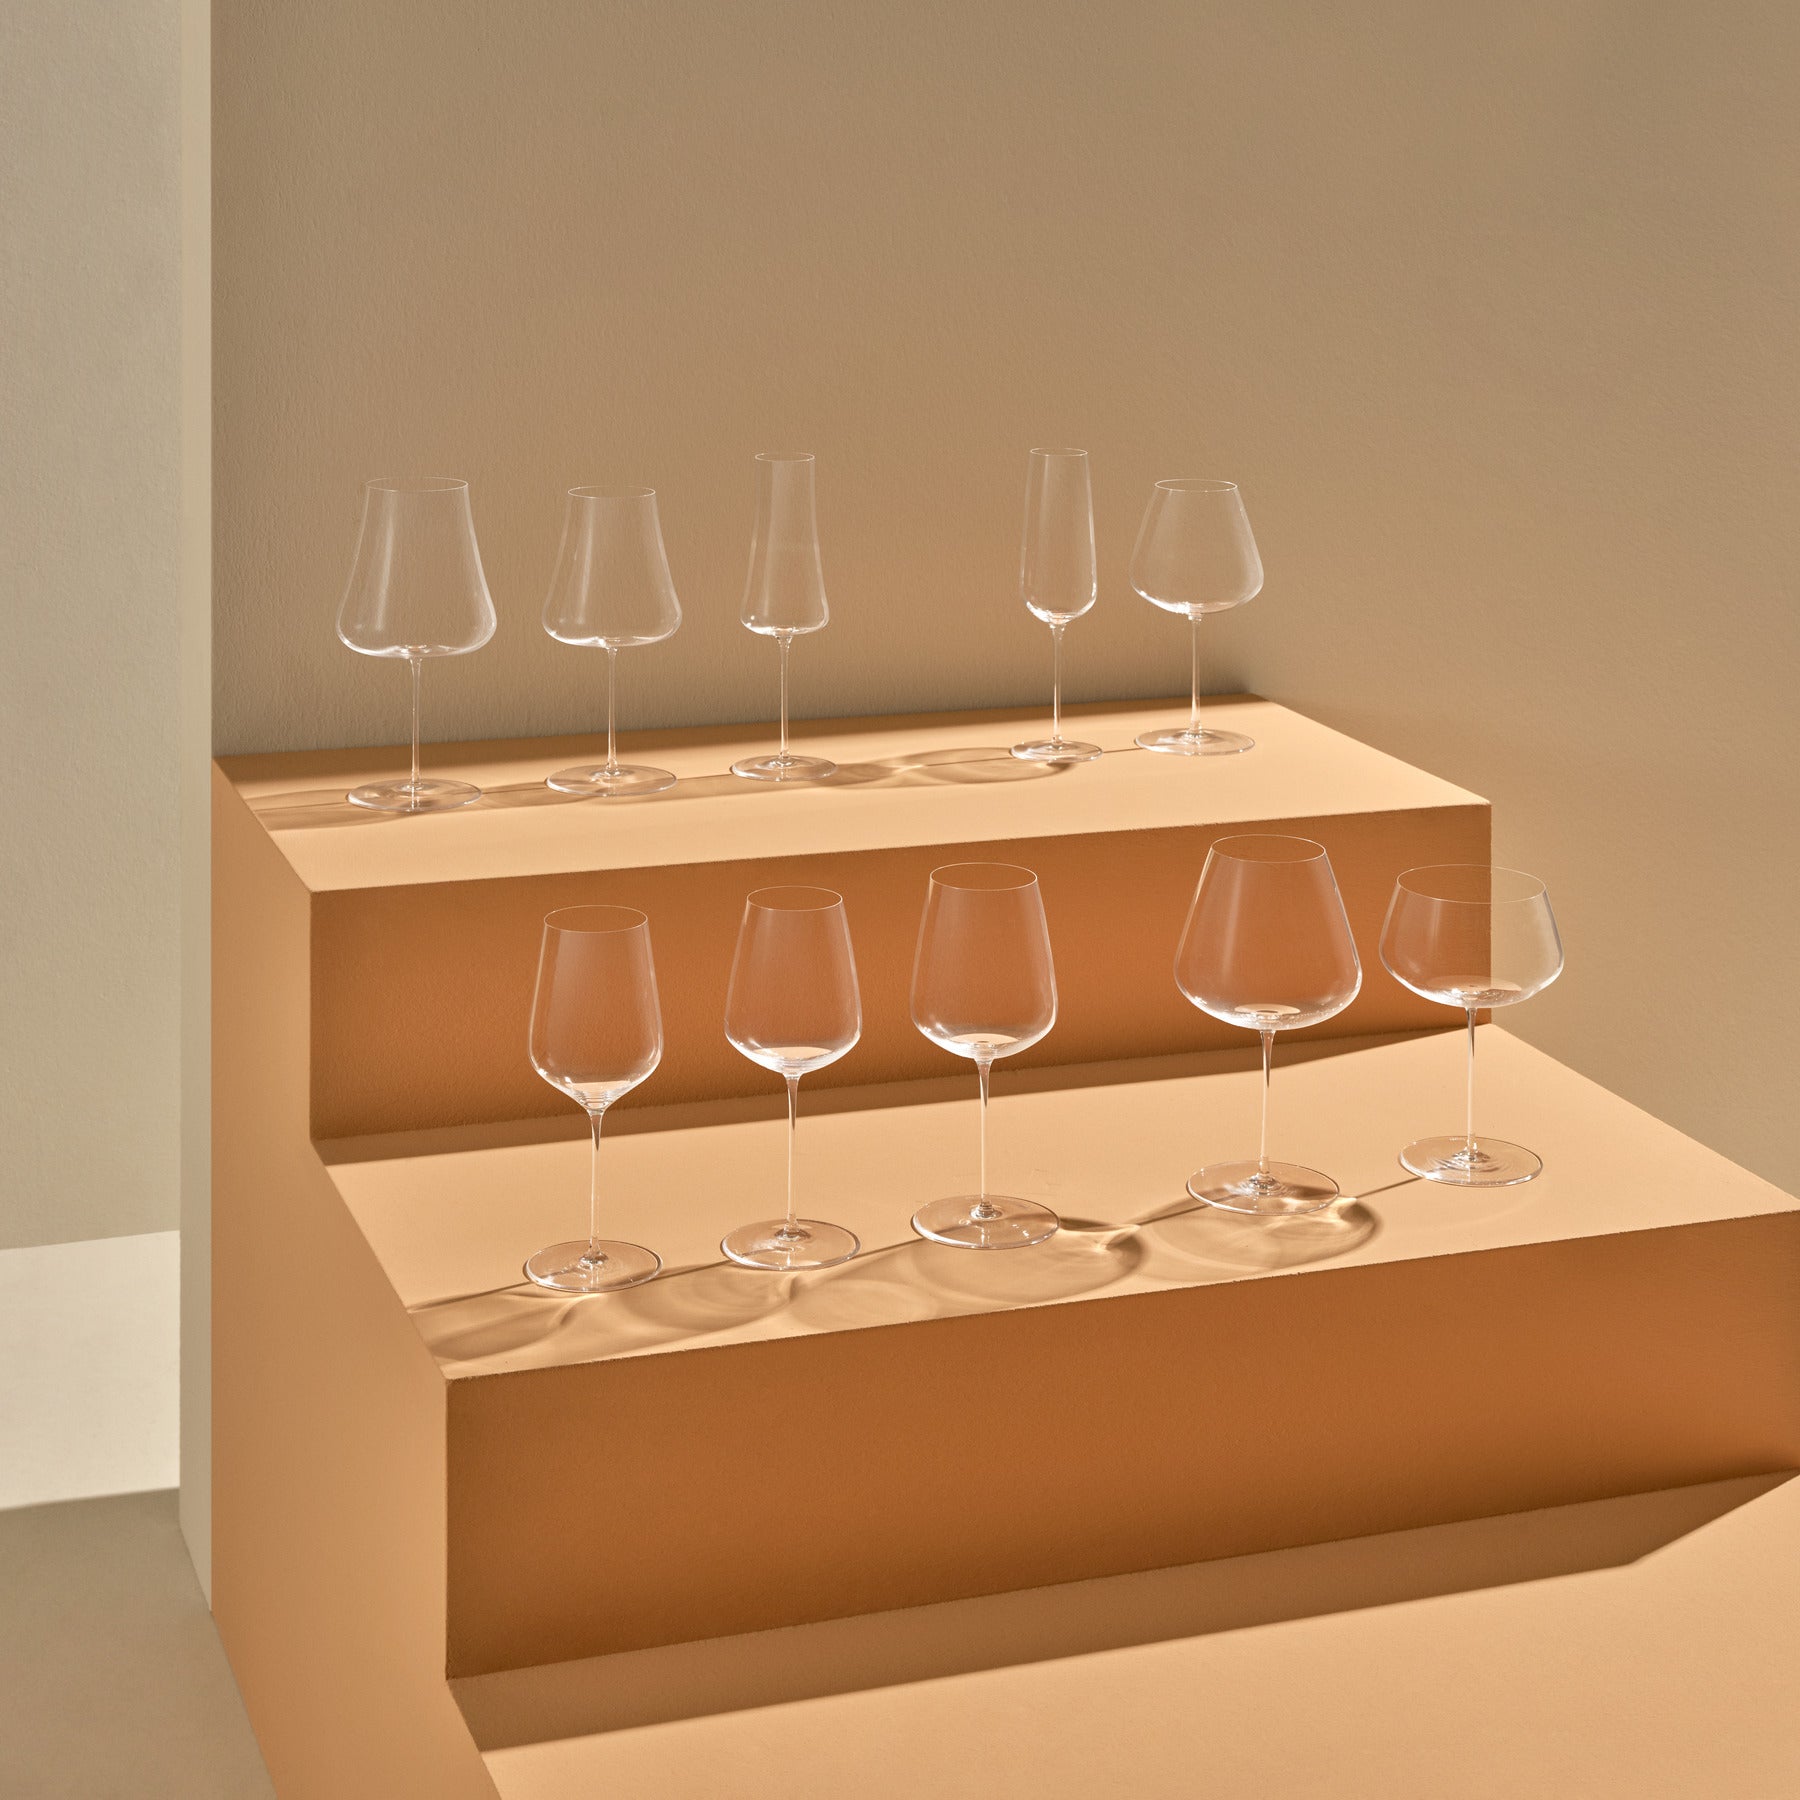 Stem Zero Set of 2 Powerful Red Wine Glasses – NUDE USA